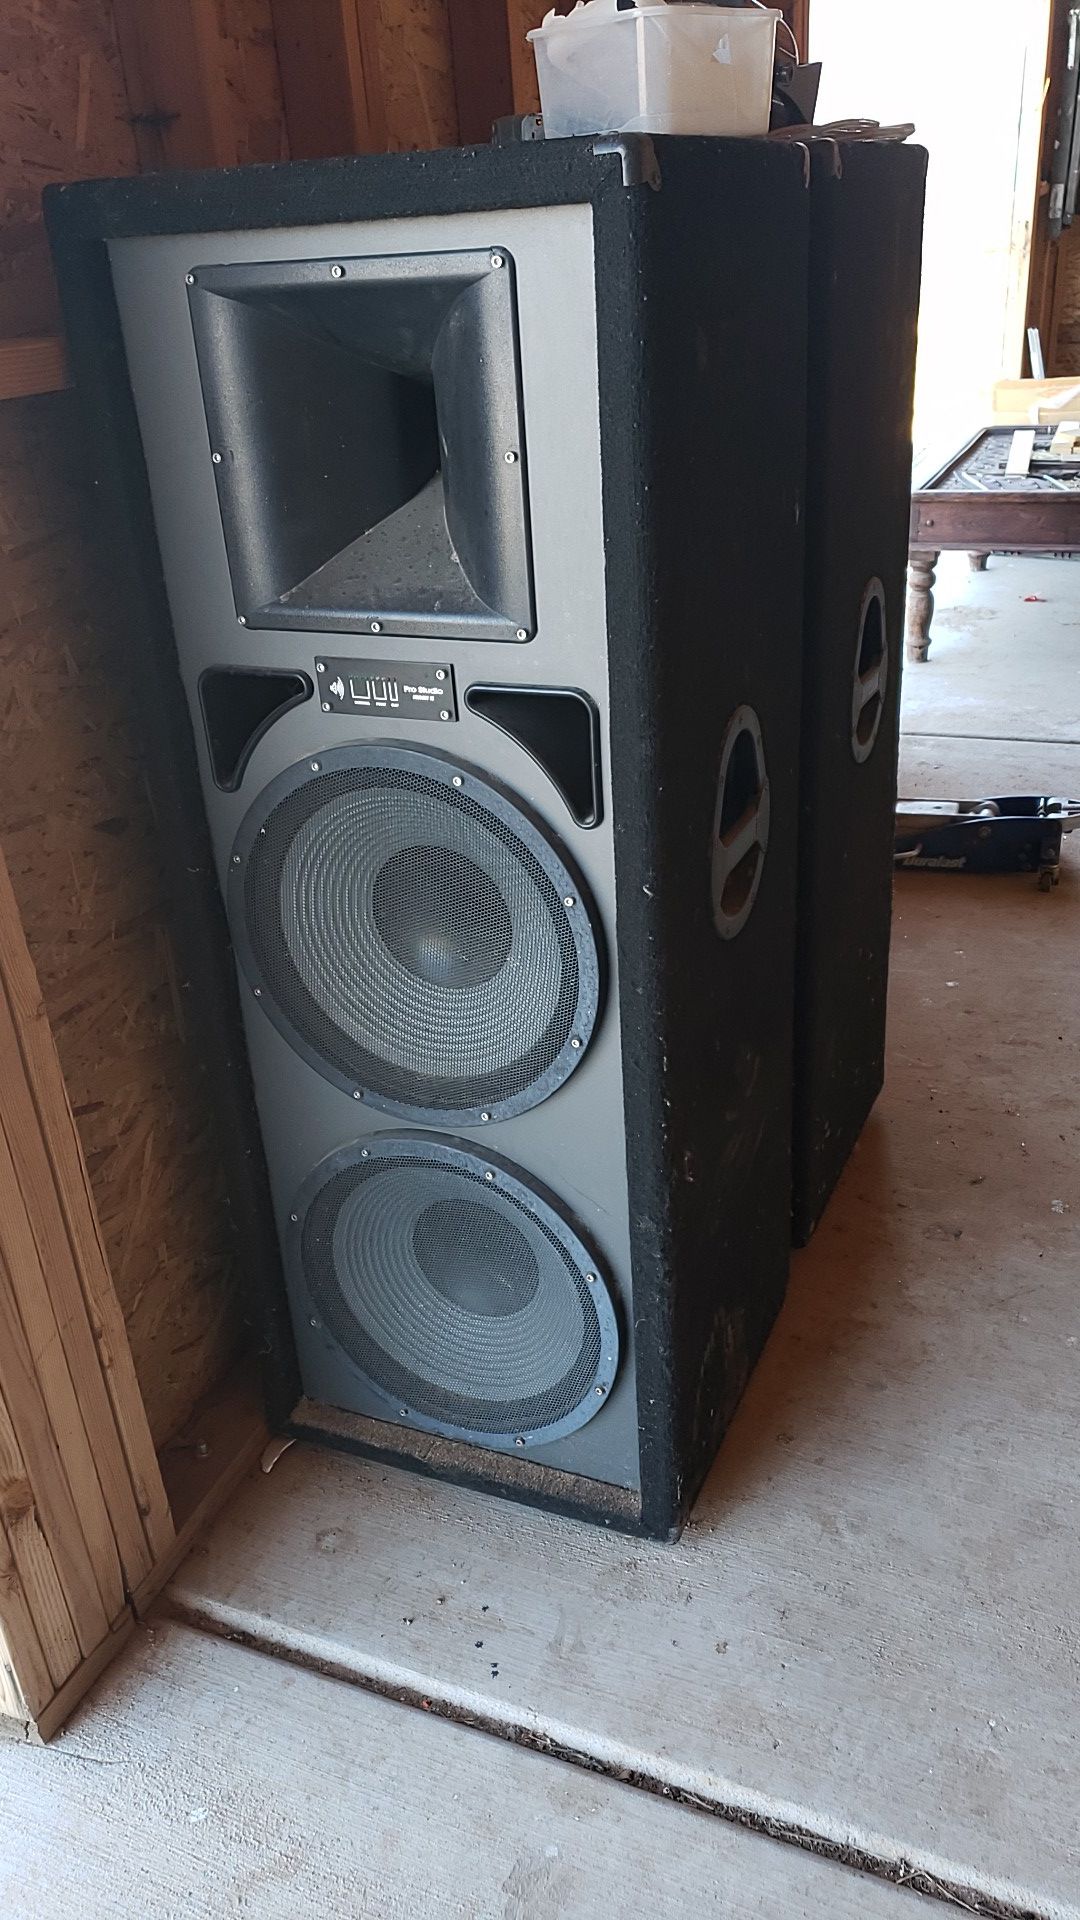 Pro studio mach 2 speakers